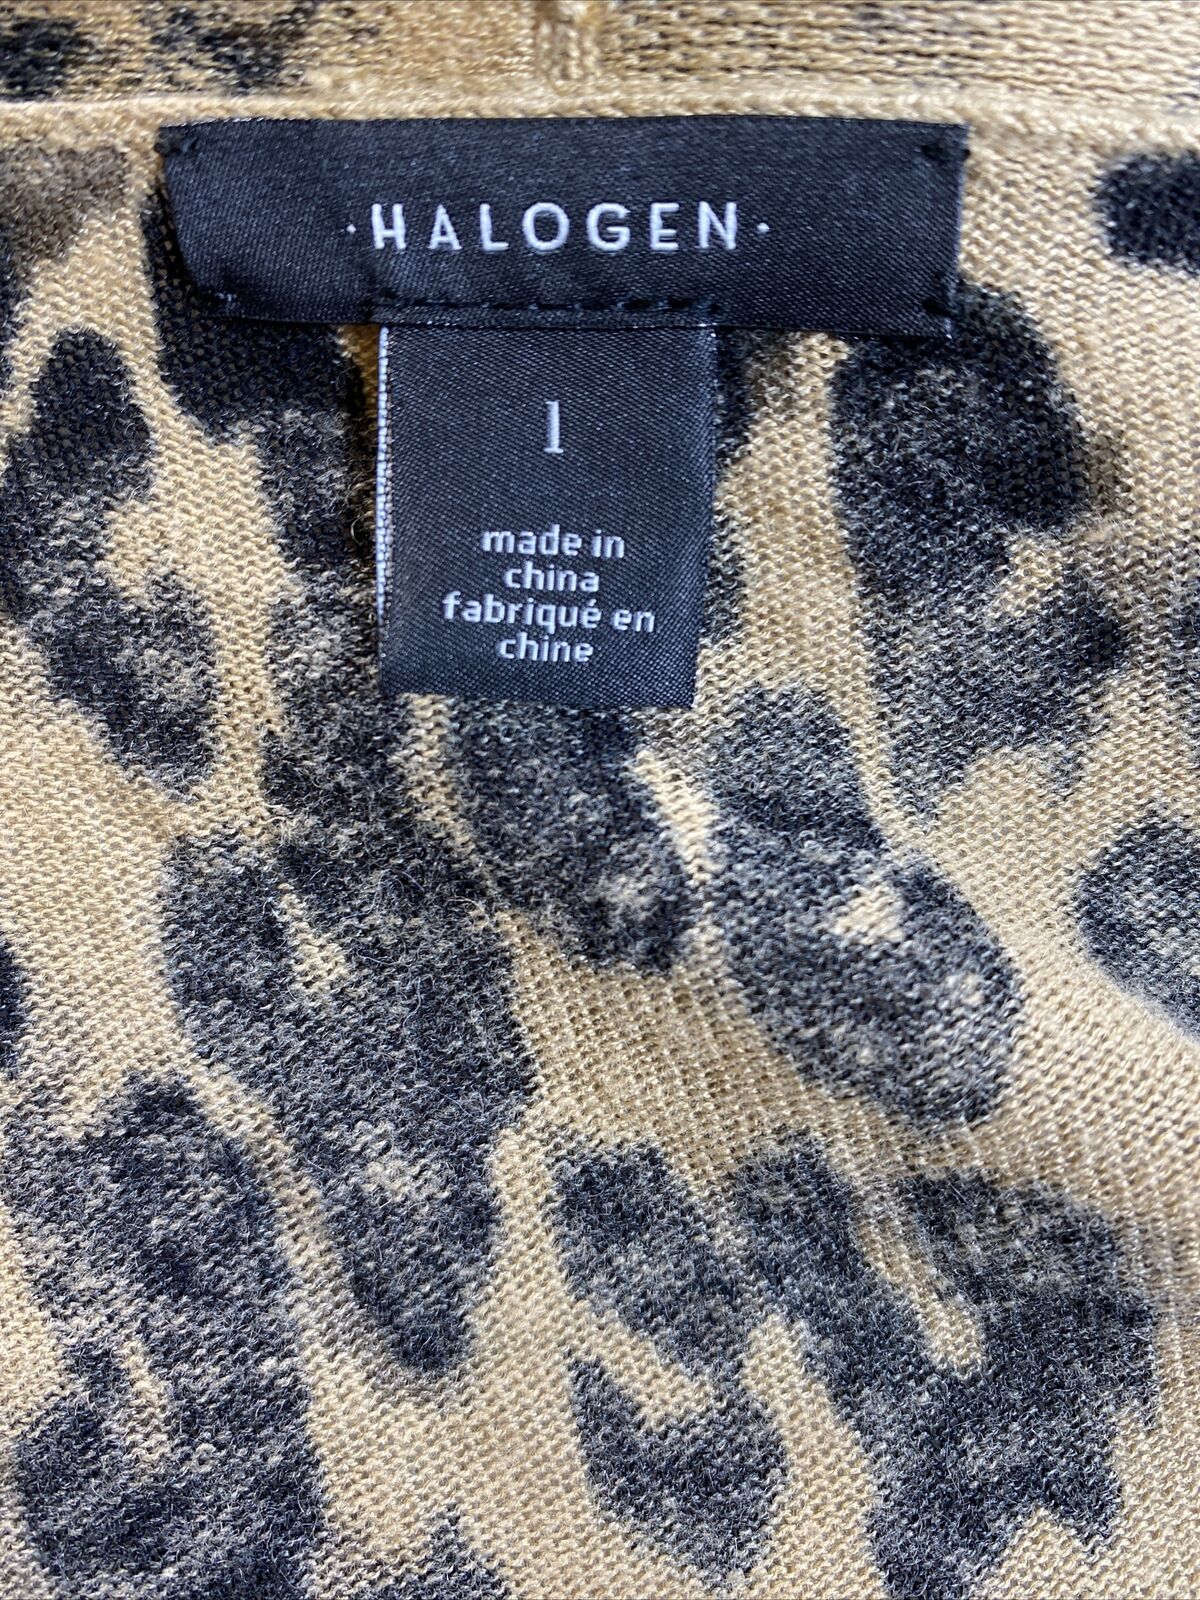 Halogen Women's Brown/Black Animal Print Long Open Cardigan Sweater - 1